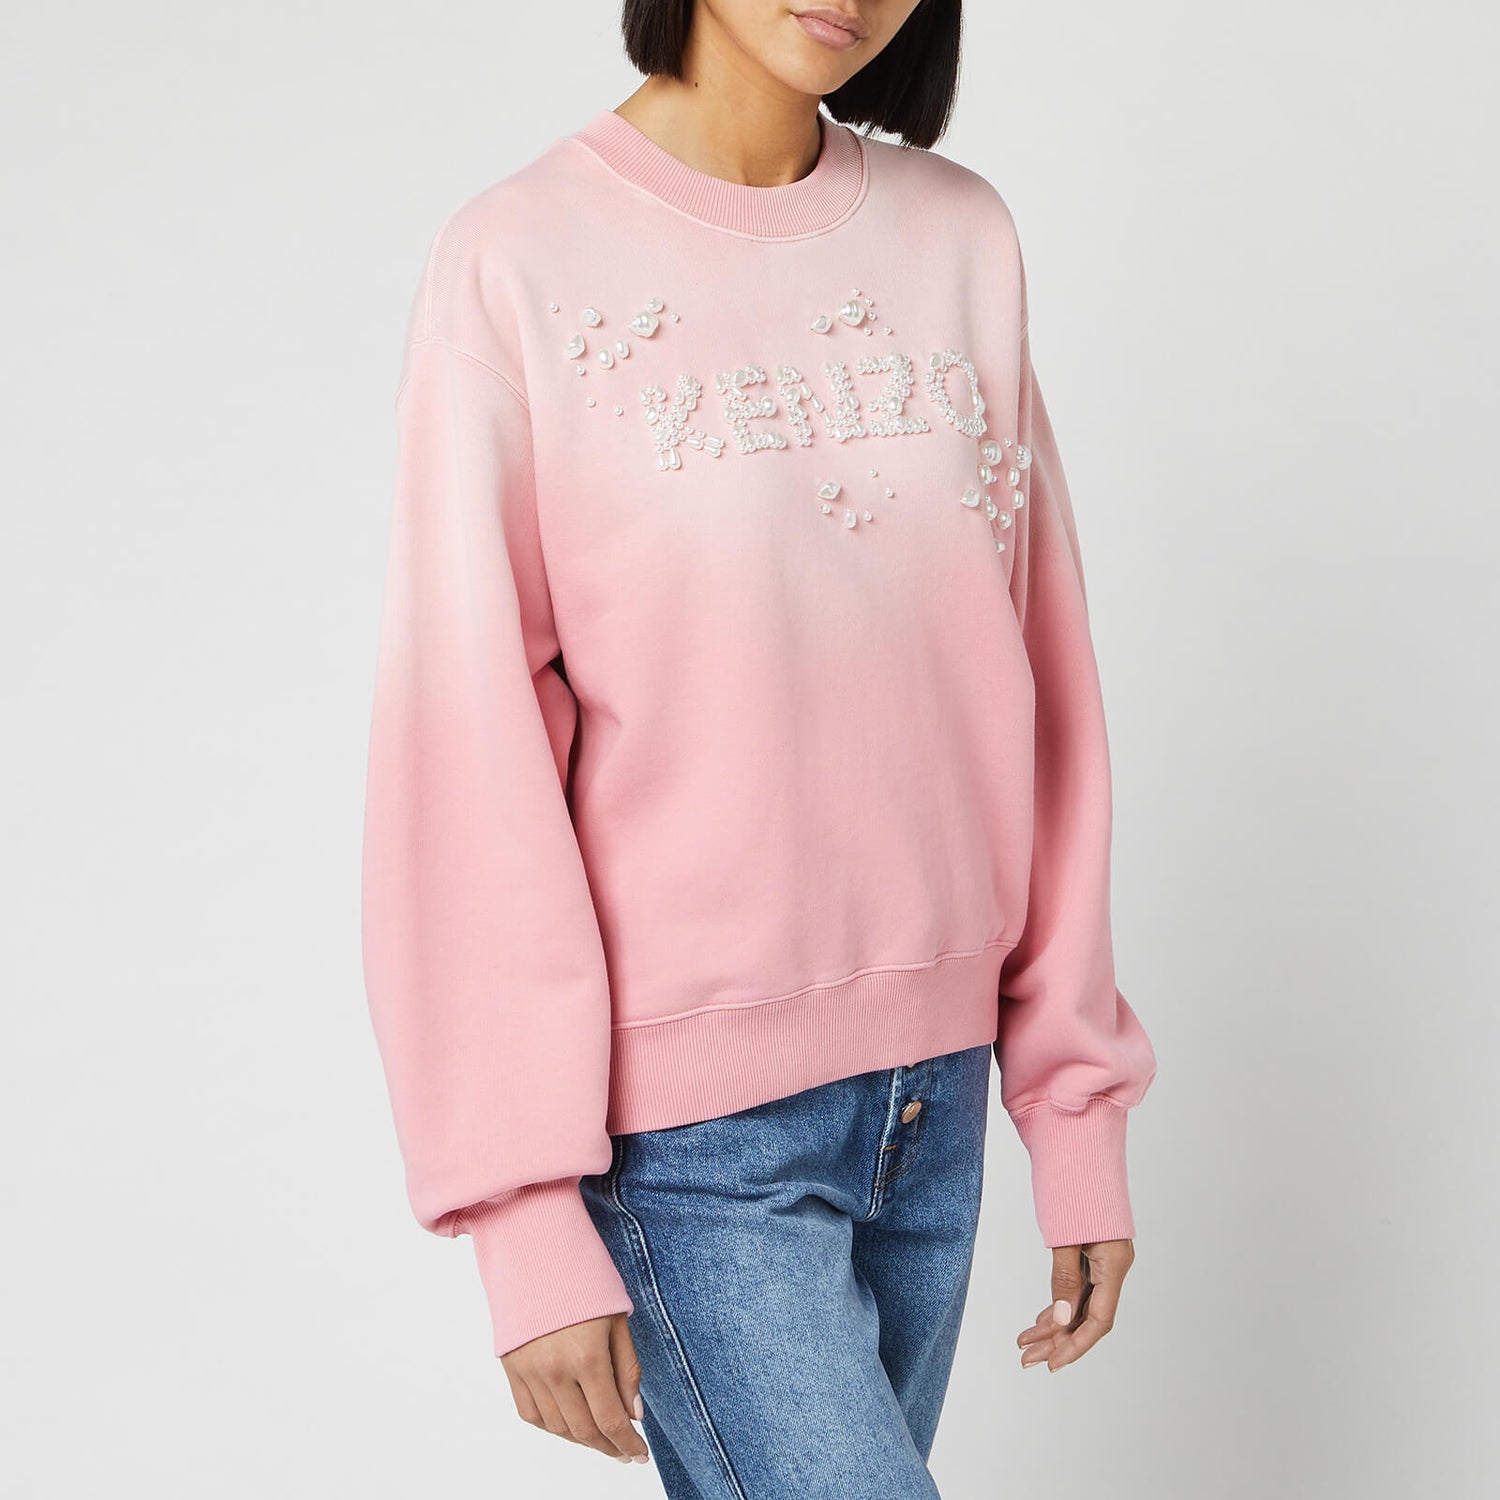 KENZO Women's Bubble Sweatshirt with Pearls Logo - Flamingo Pink - Free ...